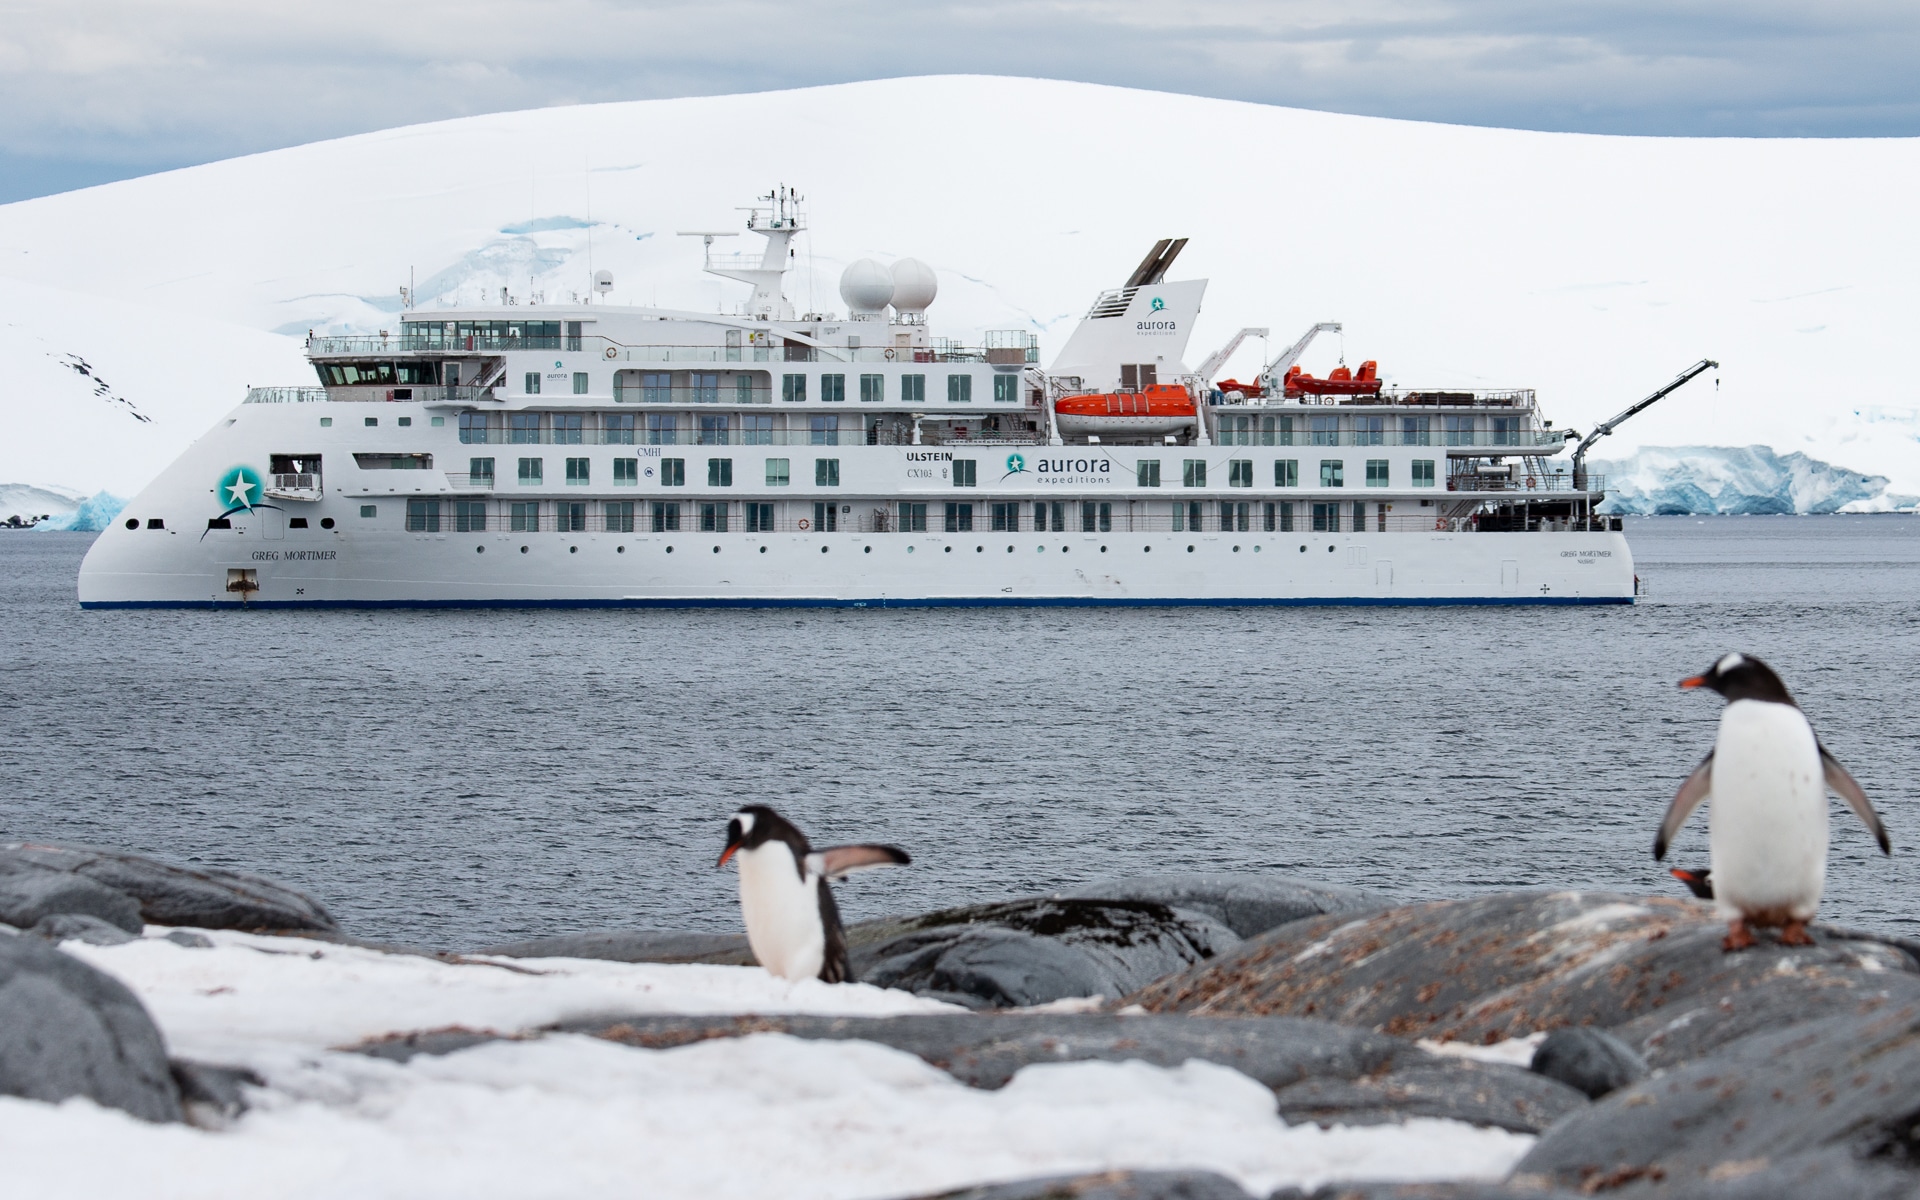 antarctic cruise reviews